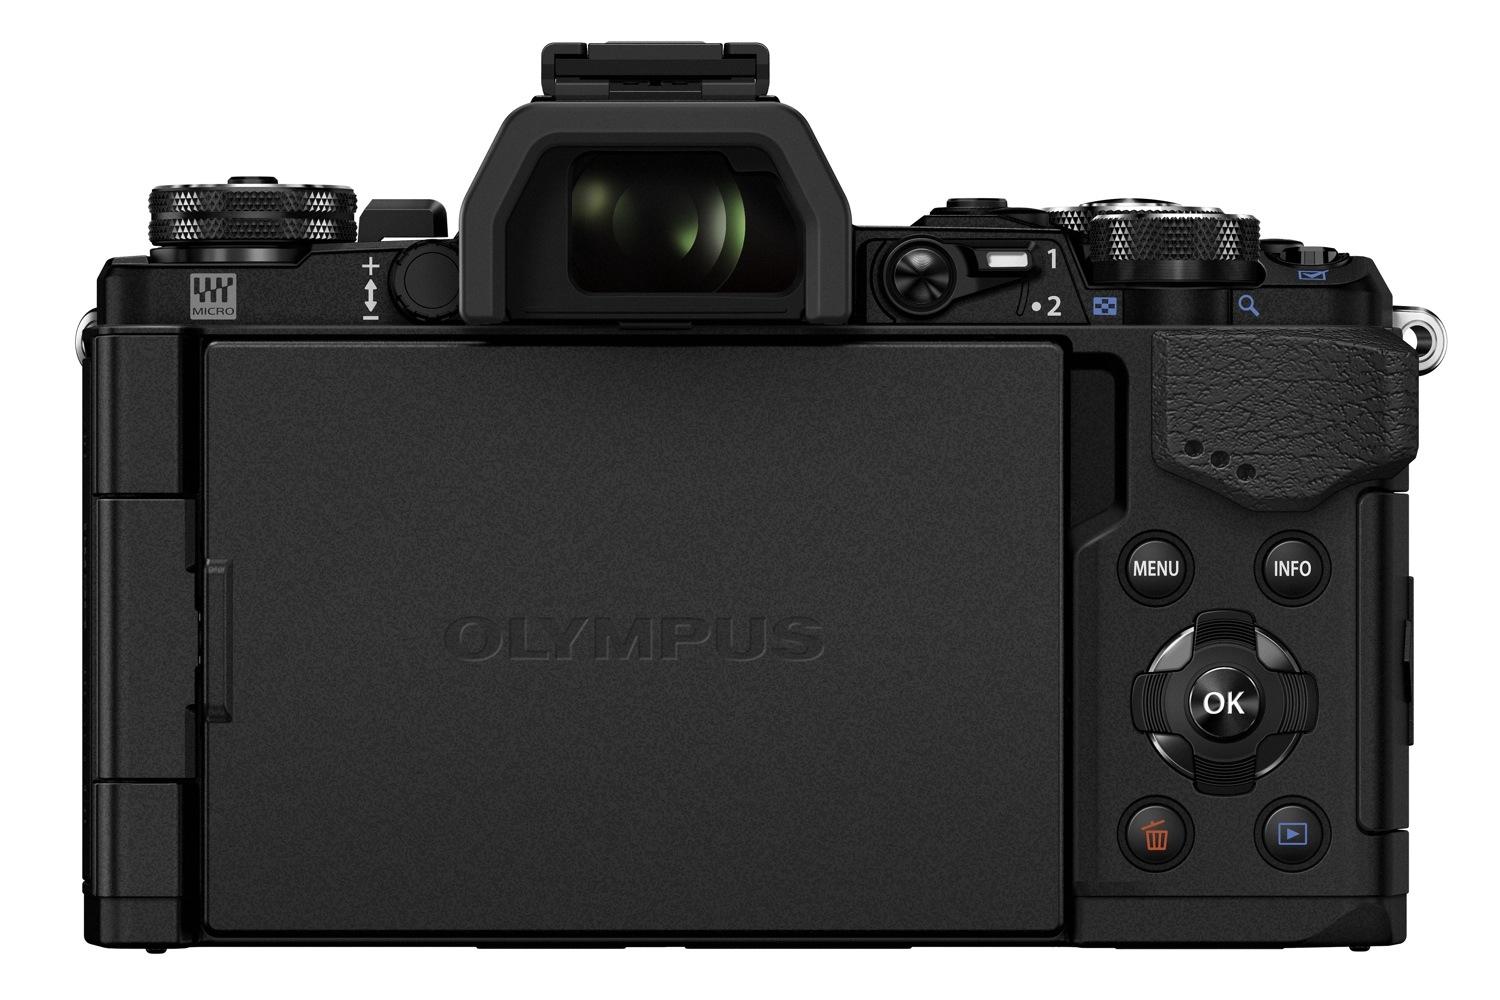 olympus e m5 mark ii puts focus movie stabilization 40 megapixel photos m5markii blk back lcd close